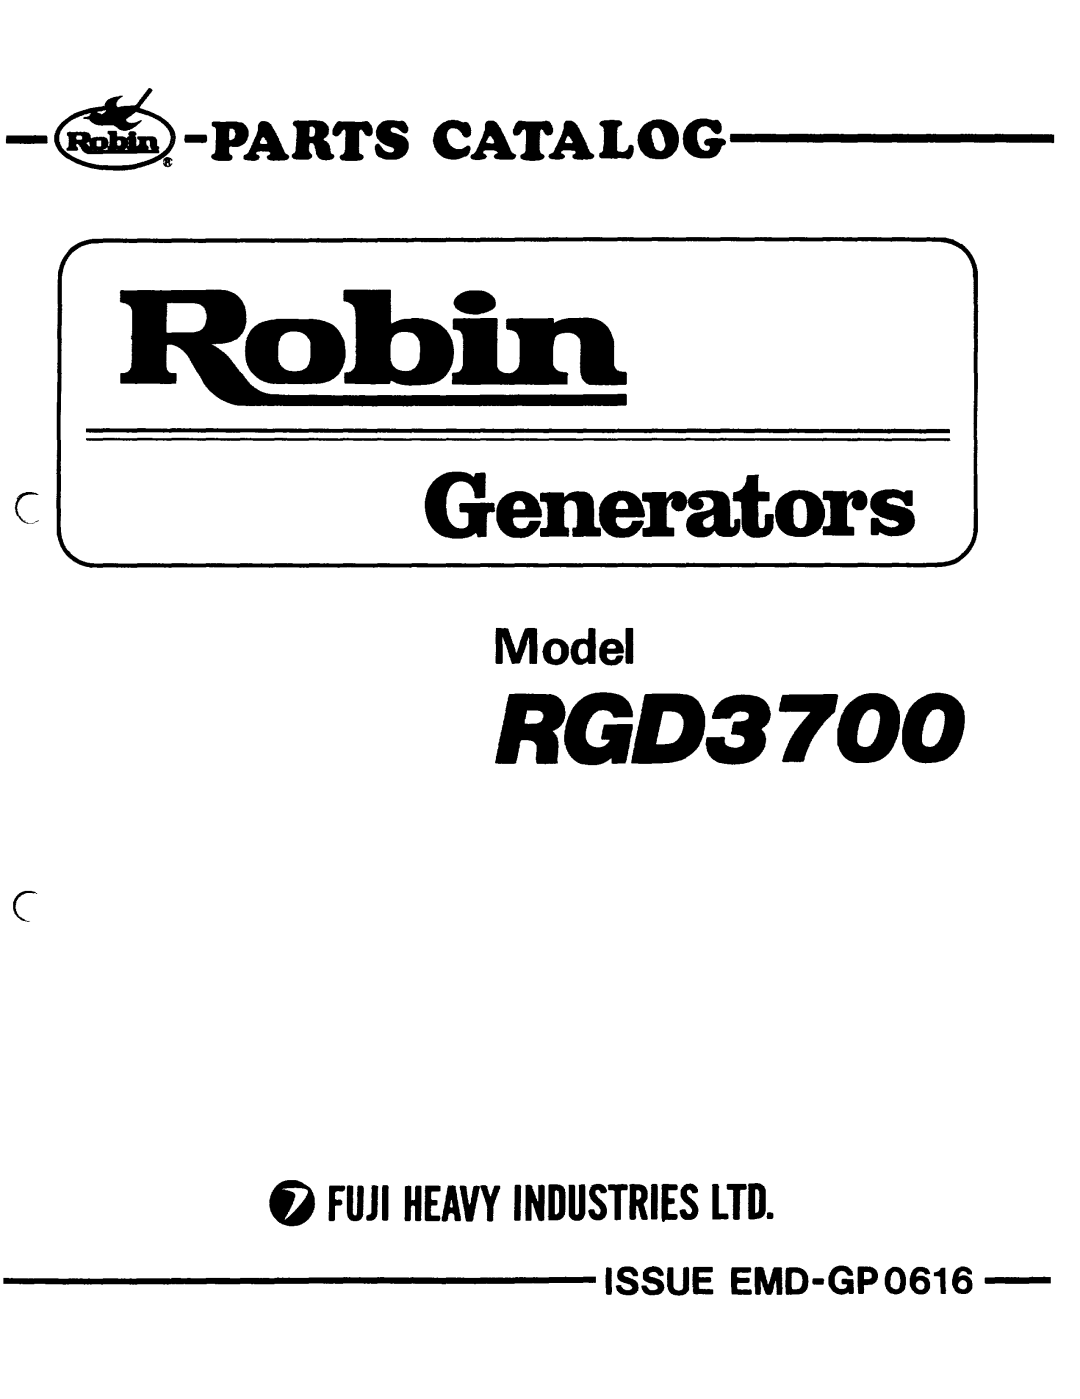 Subaru Robin Power Products RGD5000 manual RGD3700, c5-.-PARTSCATALOG, @ Fujiheavyindustriesltd, Model, Generafors 